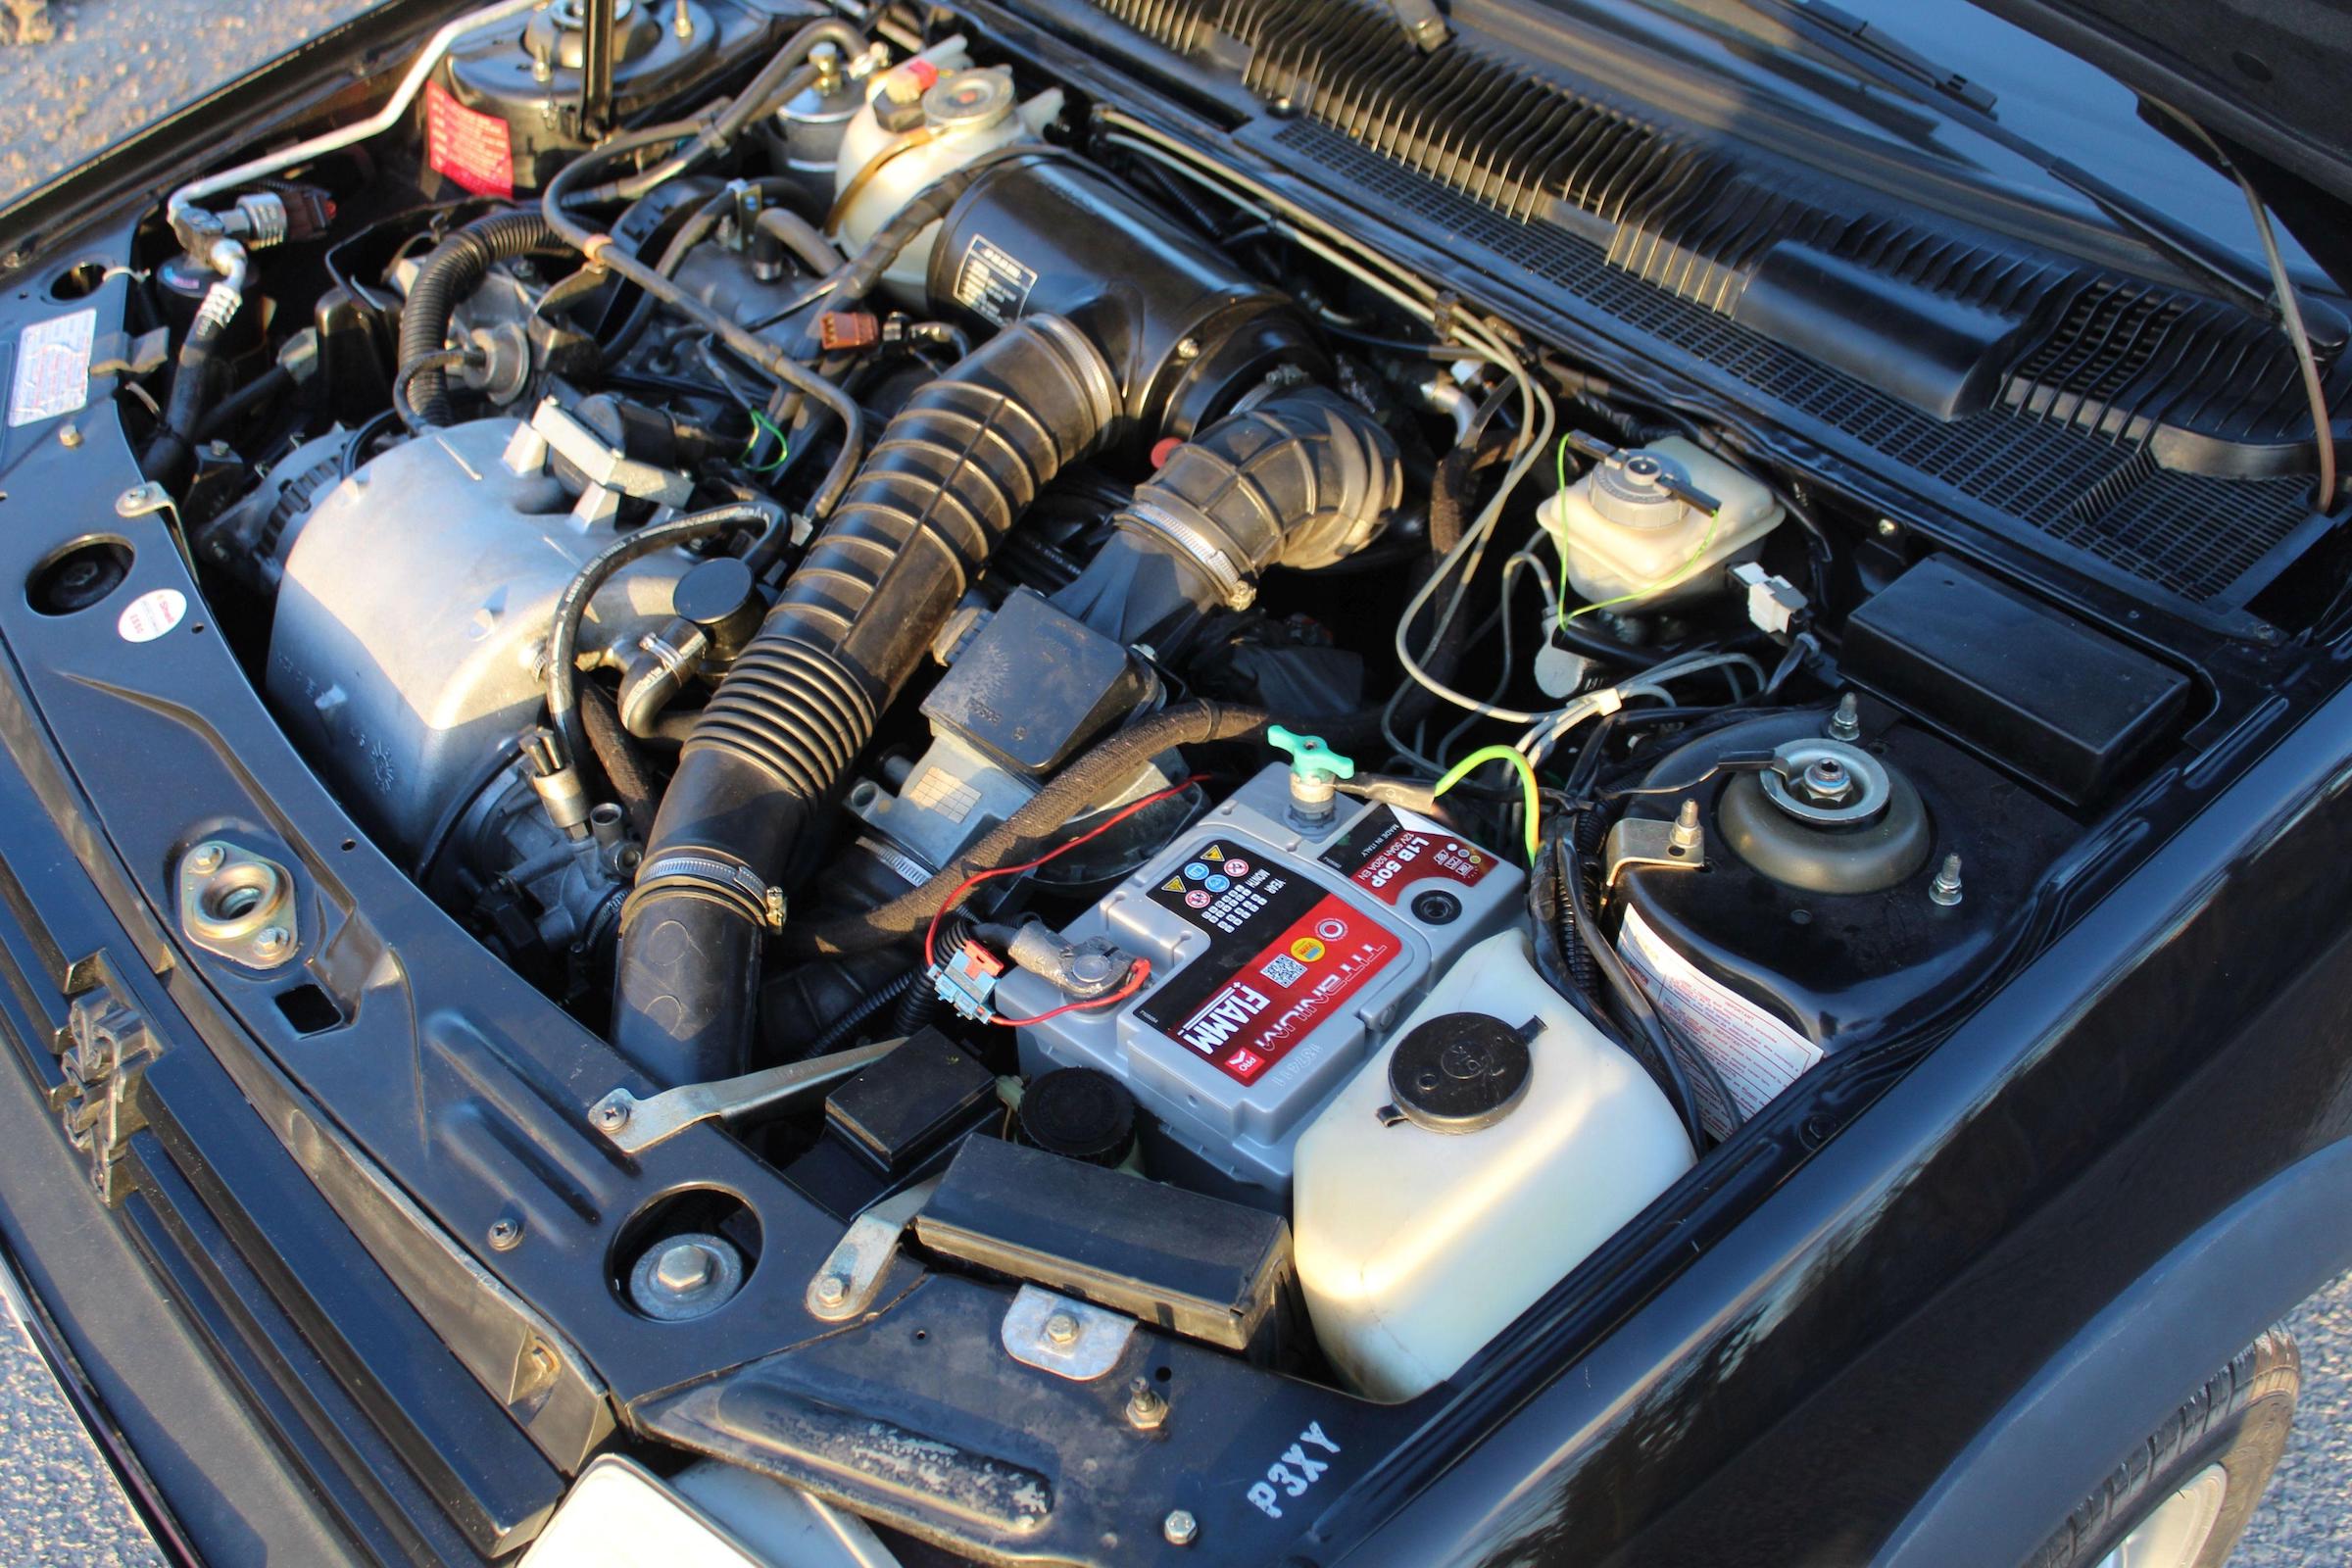 Artcurial Peugeot 205 GTI 1.9 engine